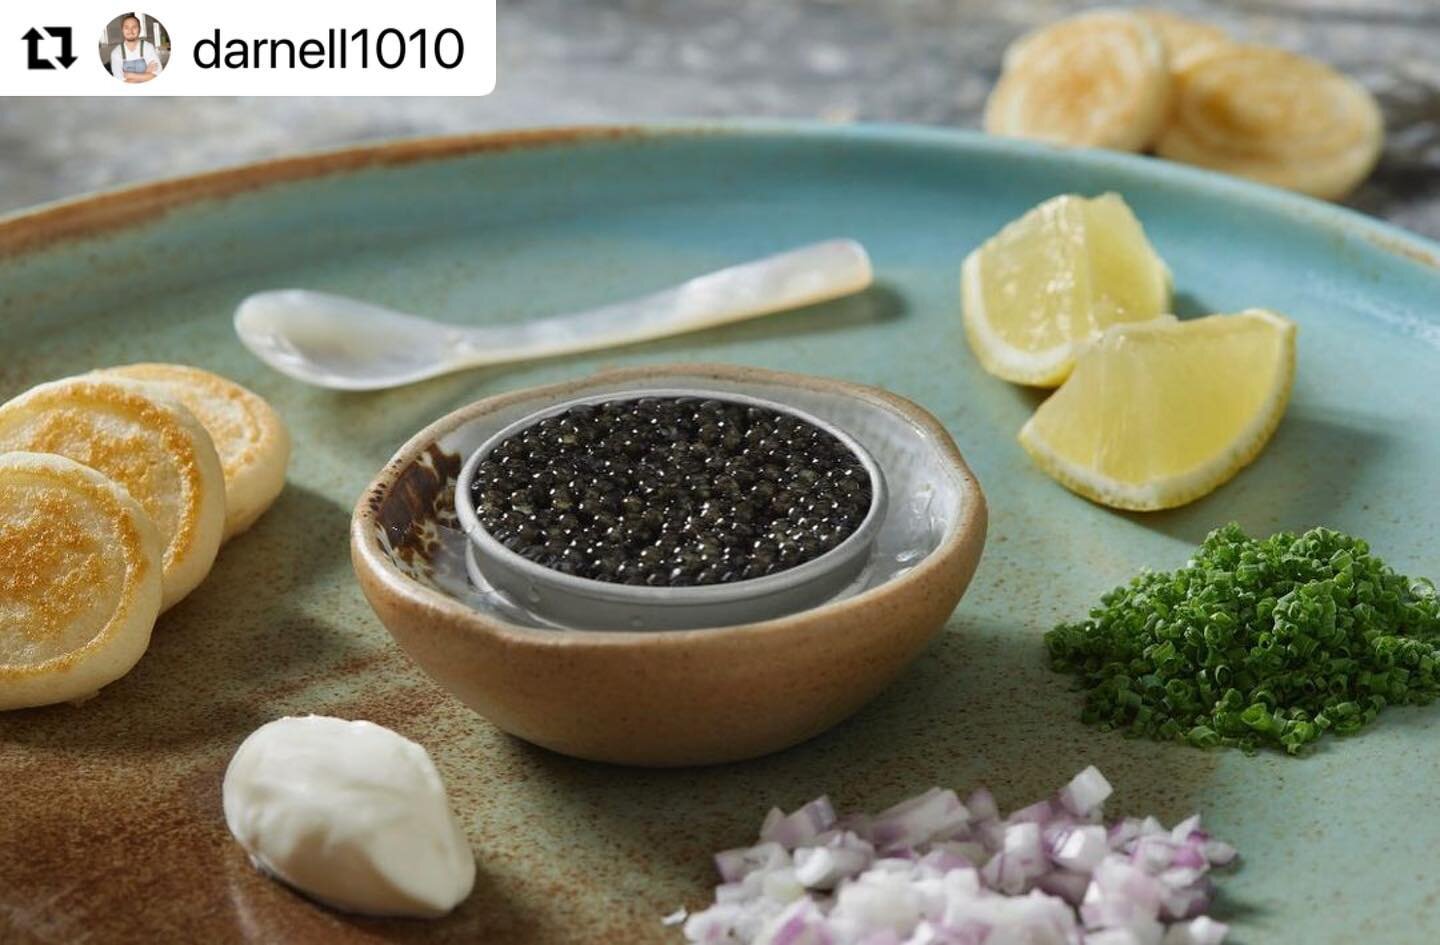 #Repost @darnell1010 with @use.repost
・・・
Canadian Sturgeon Caviar

#private #chef #fine #dining #luxury #upgrade #blinis #cremefraiche #alwaysavailable #caviarserviceathome 

📷 @ridgerockstudios 
🐟 @meta4foods